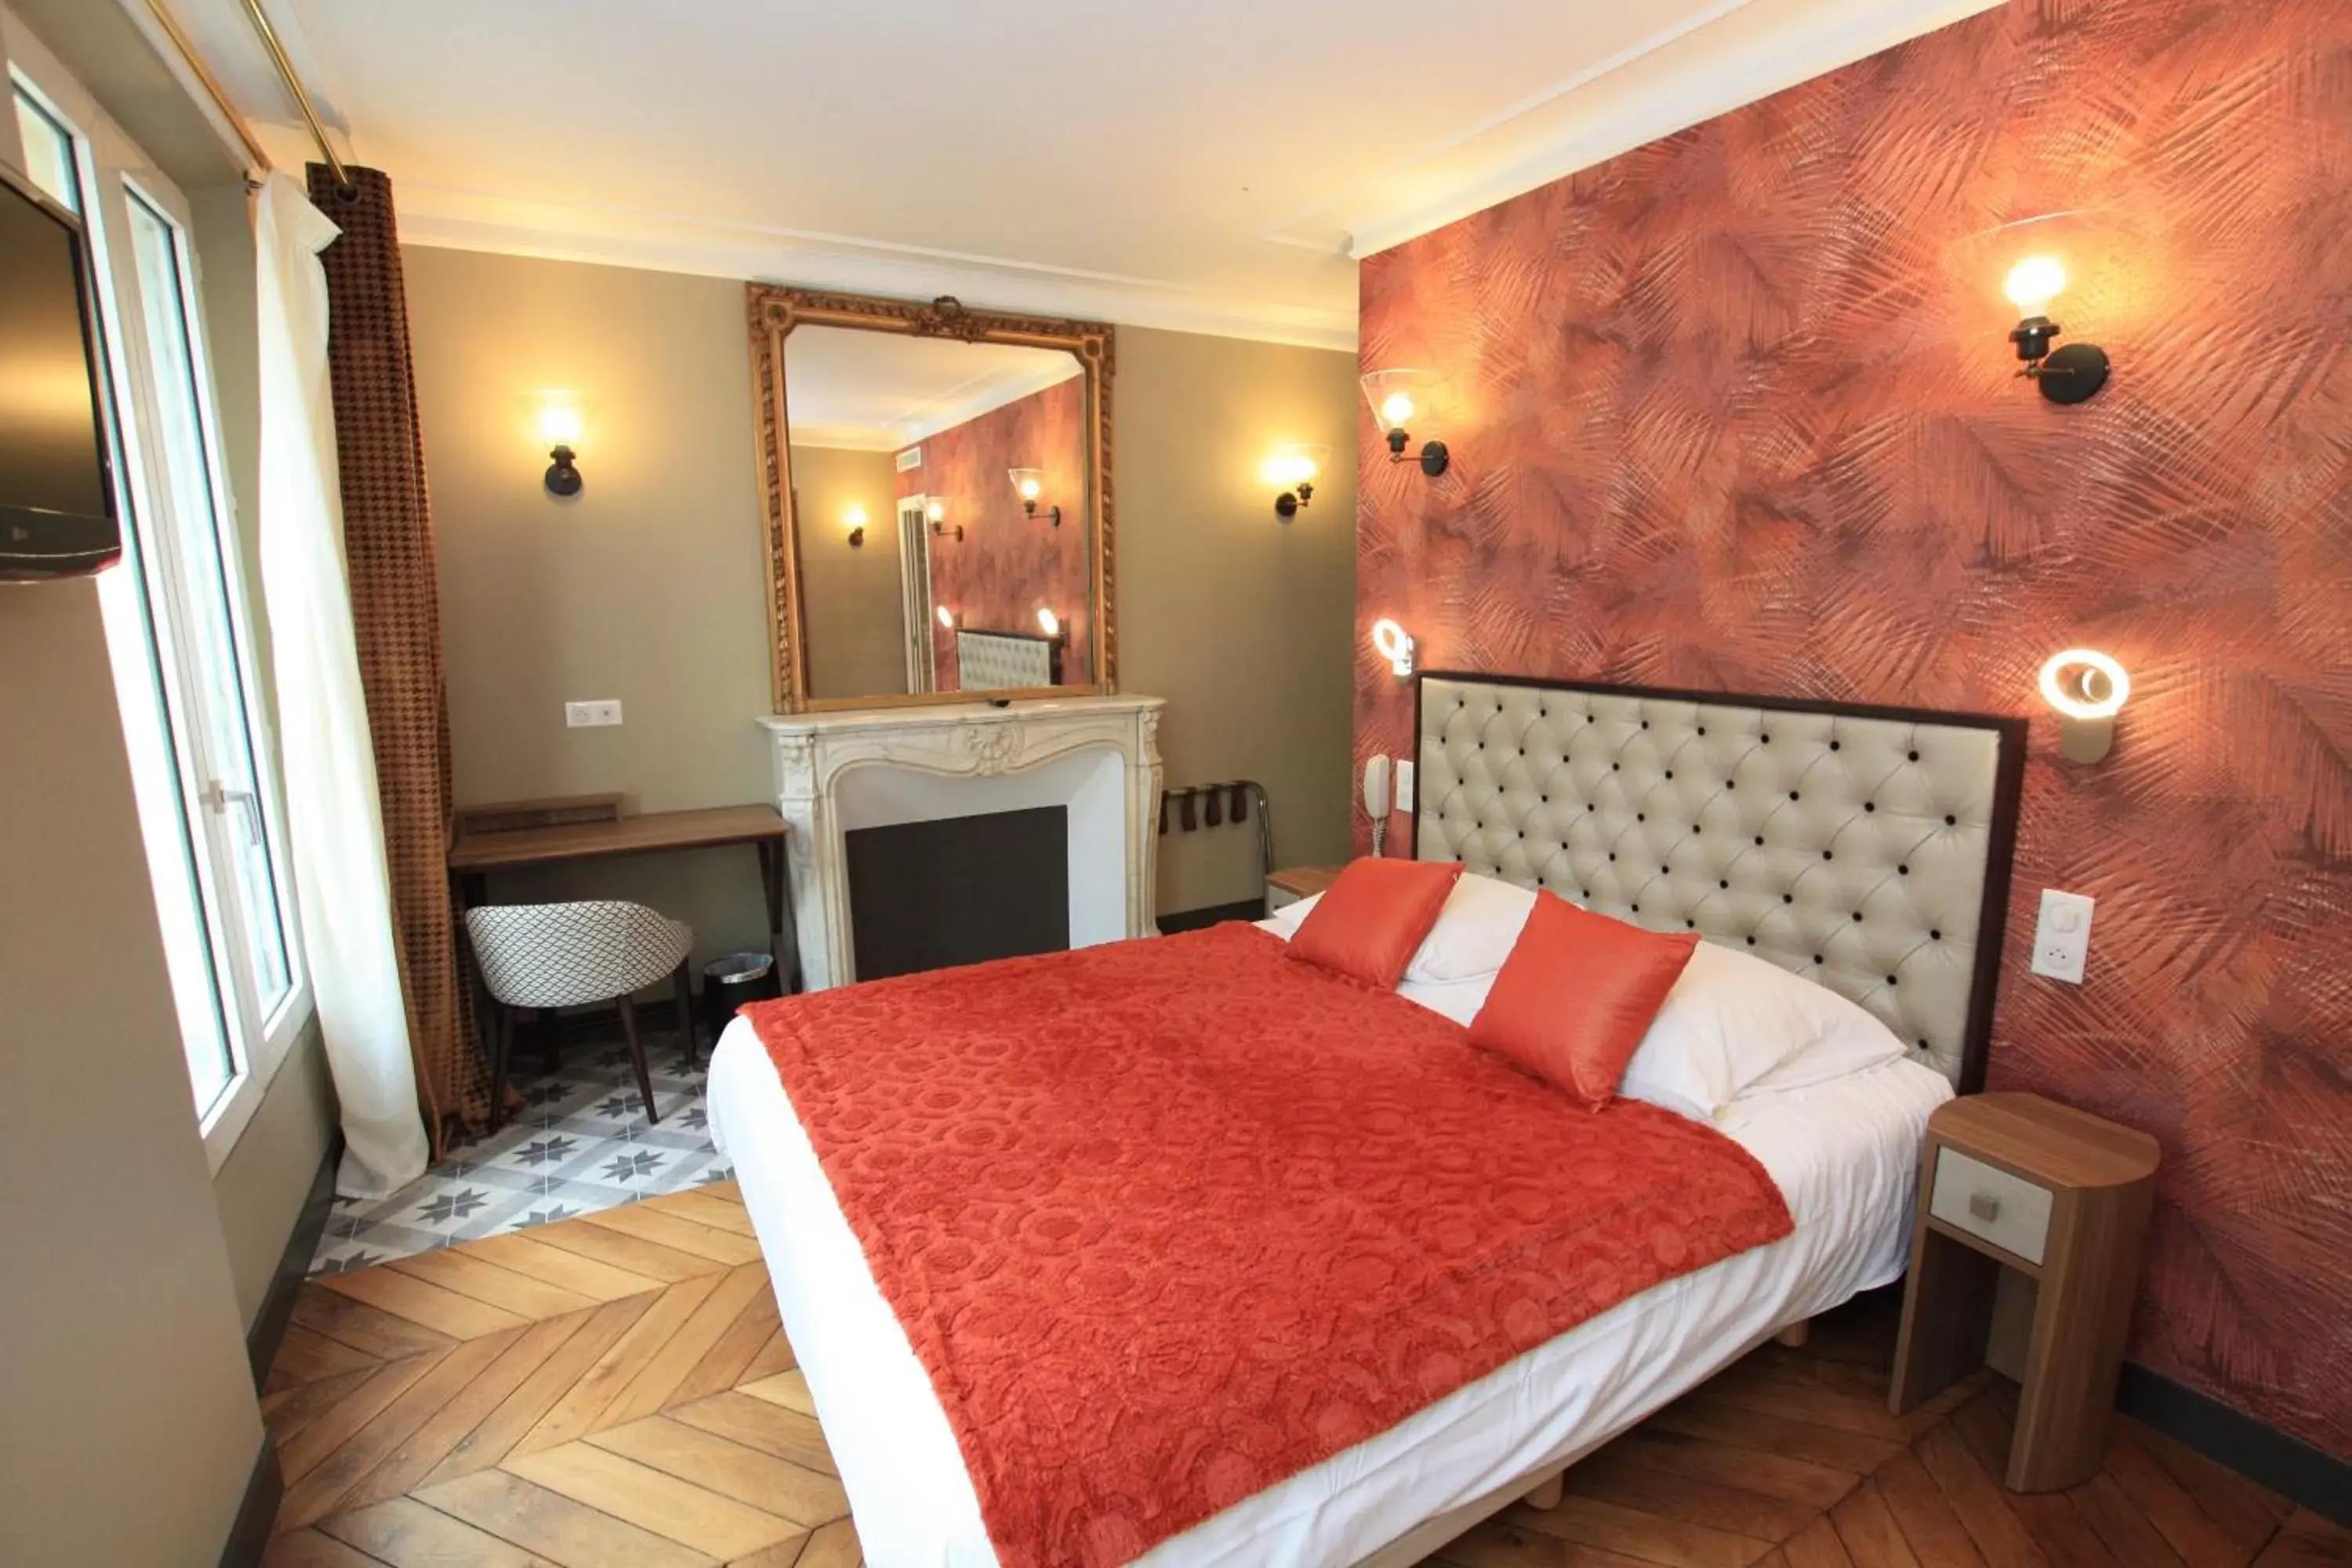 Bedroom, Room Photo in Excelsior Batignolles